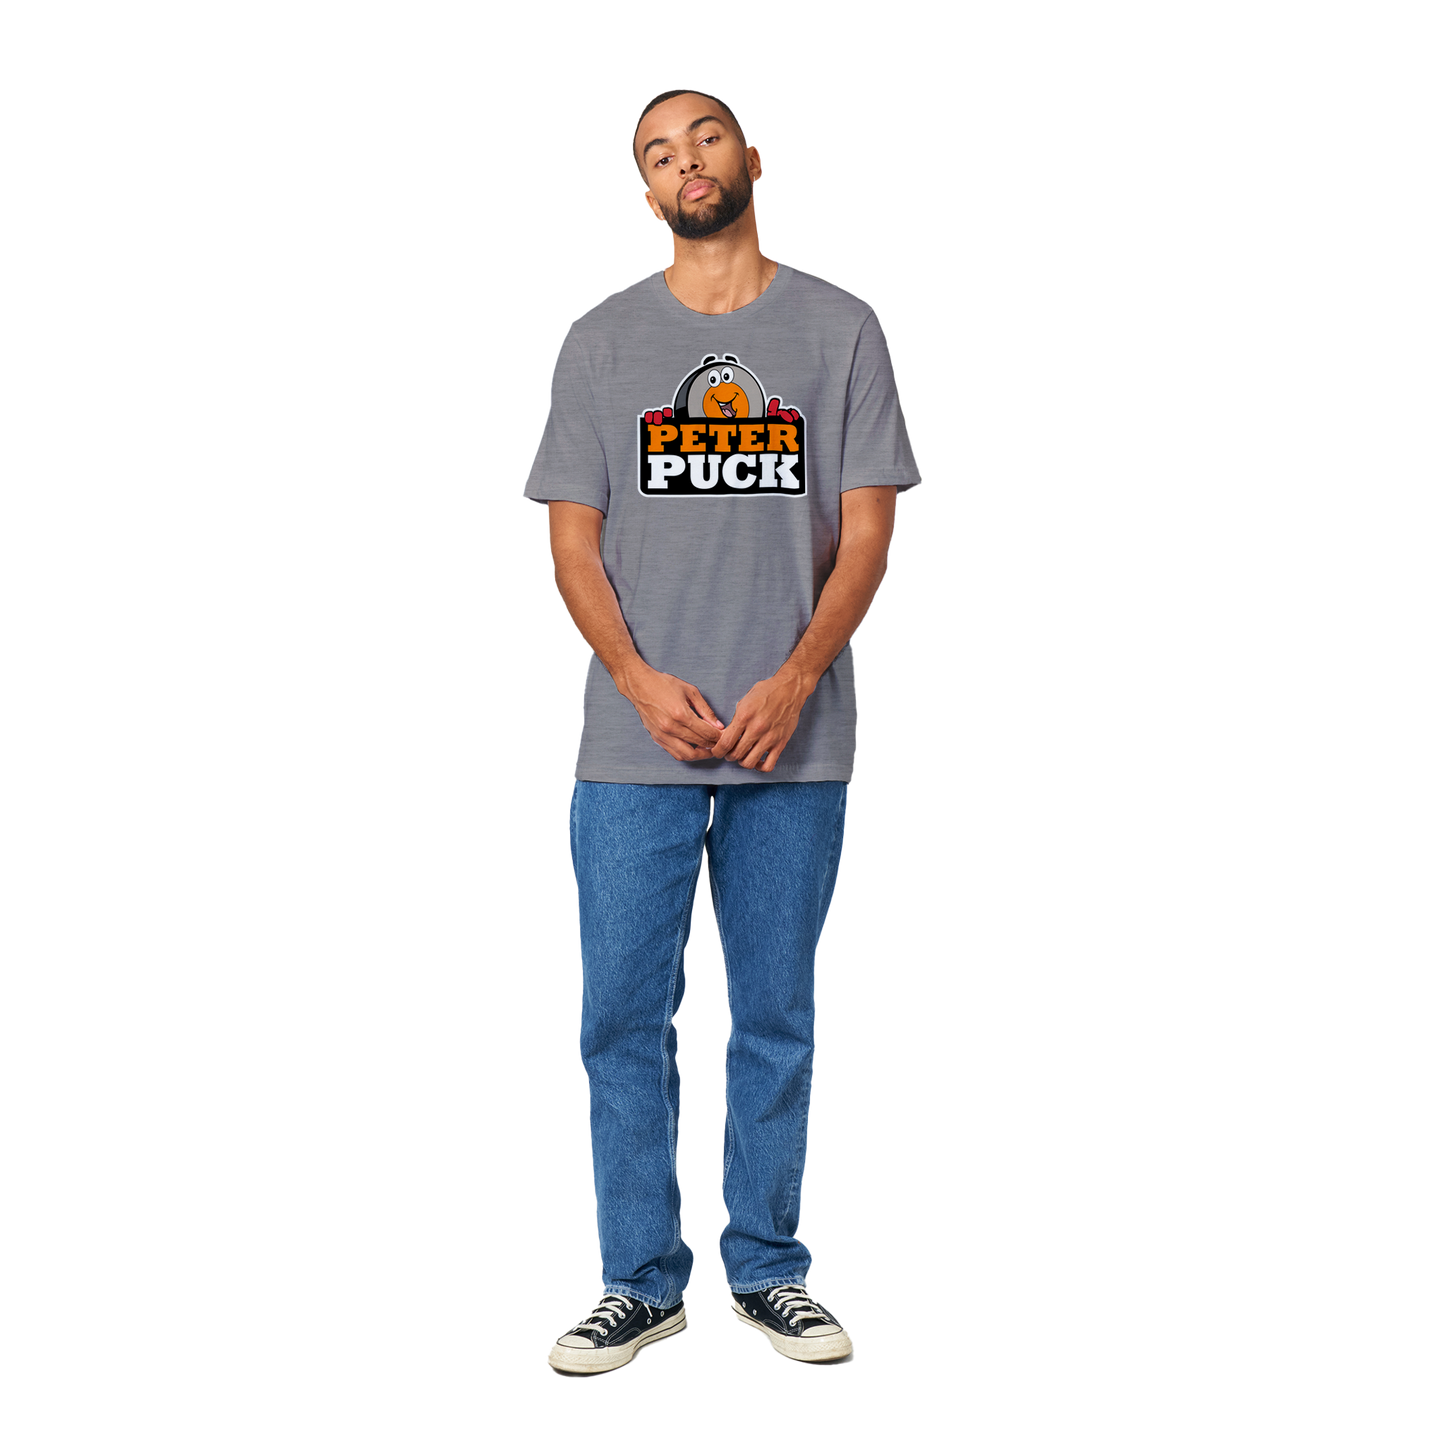 Peter Puck Peek Mens Triblend Crewneck T-shirt